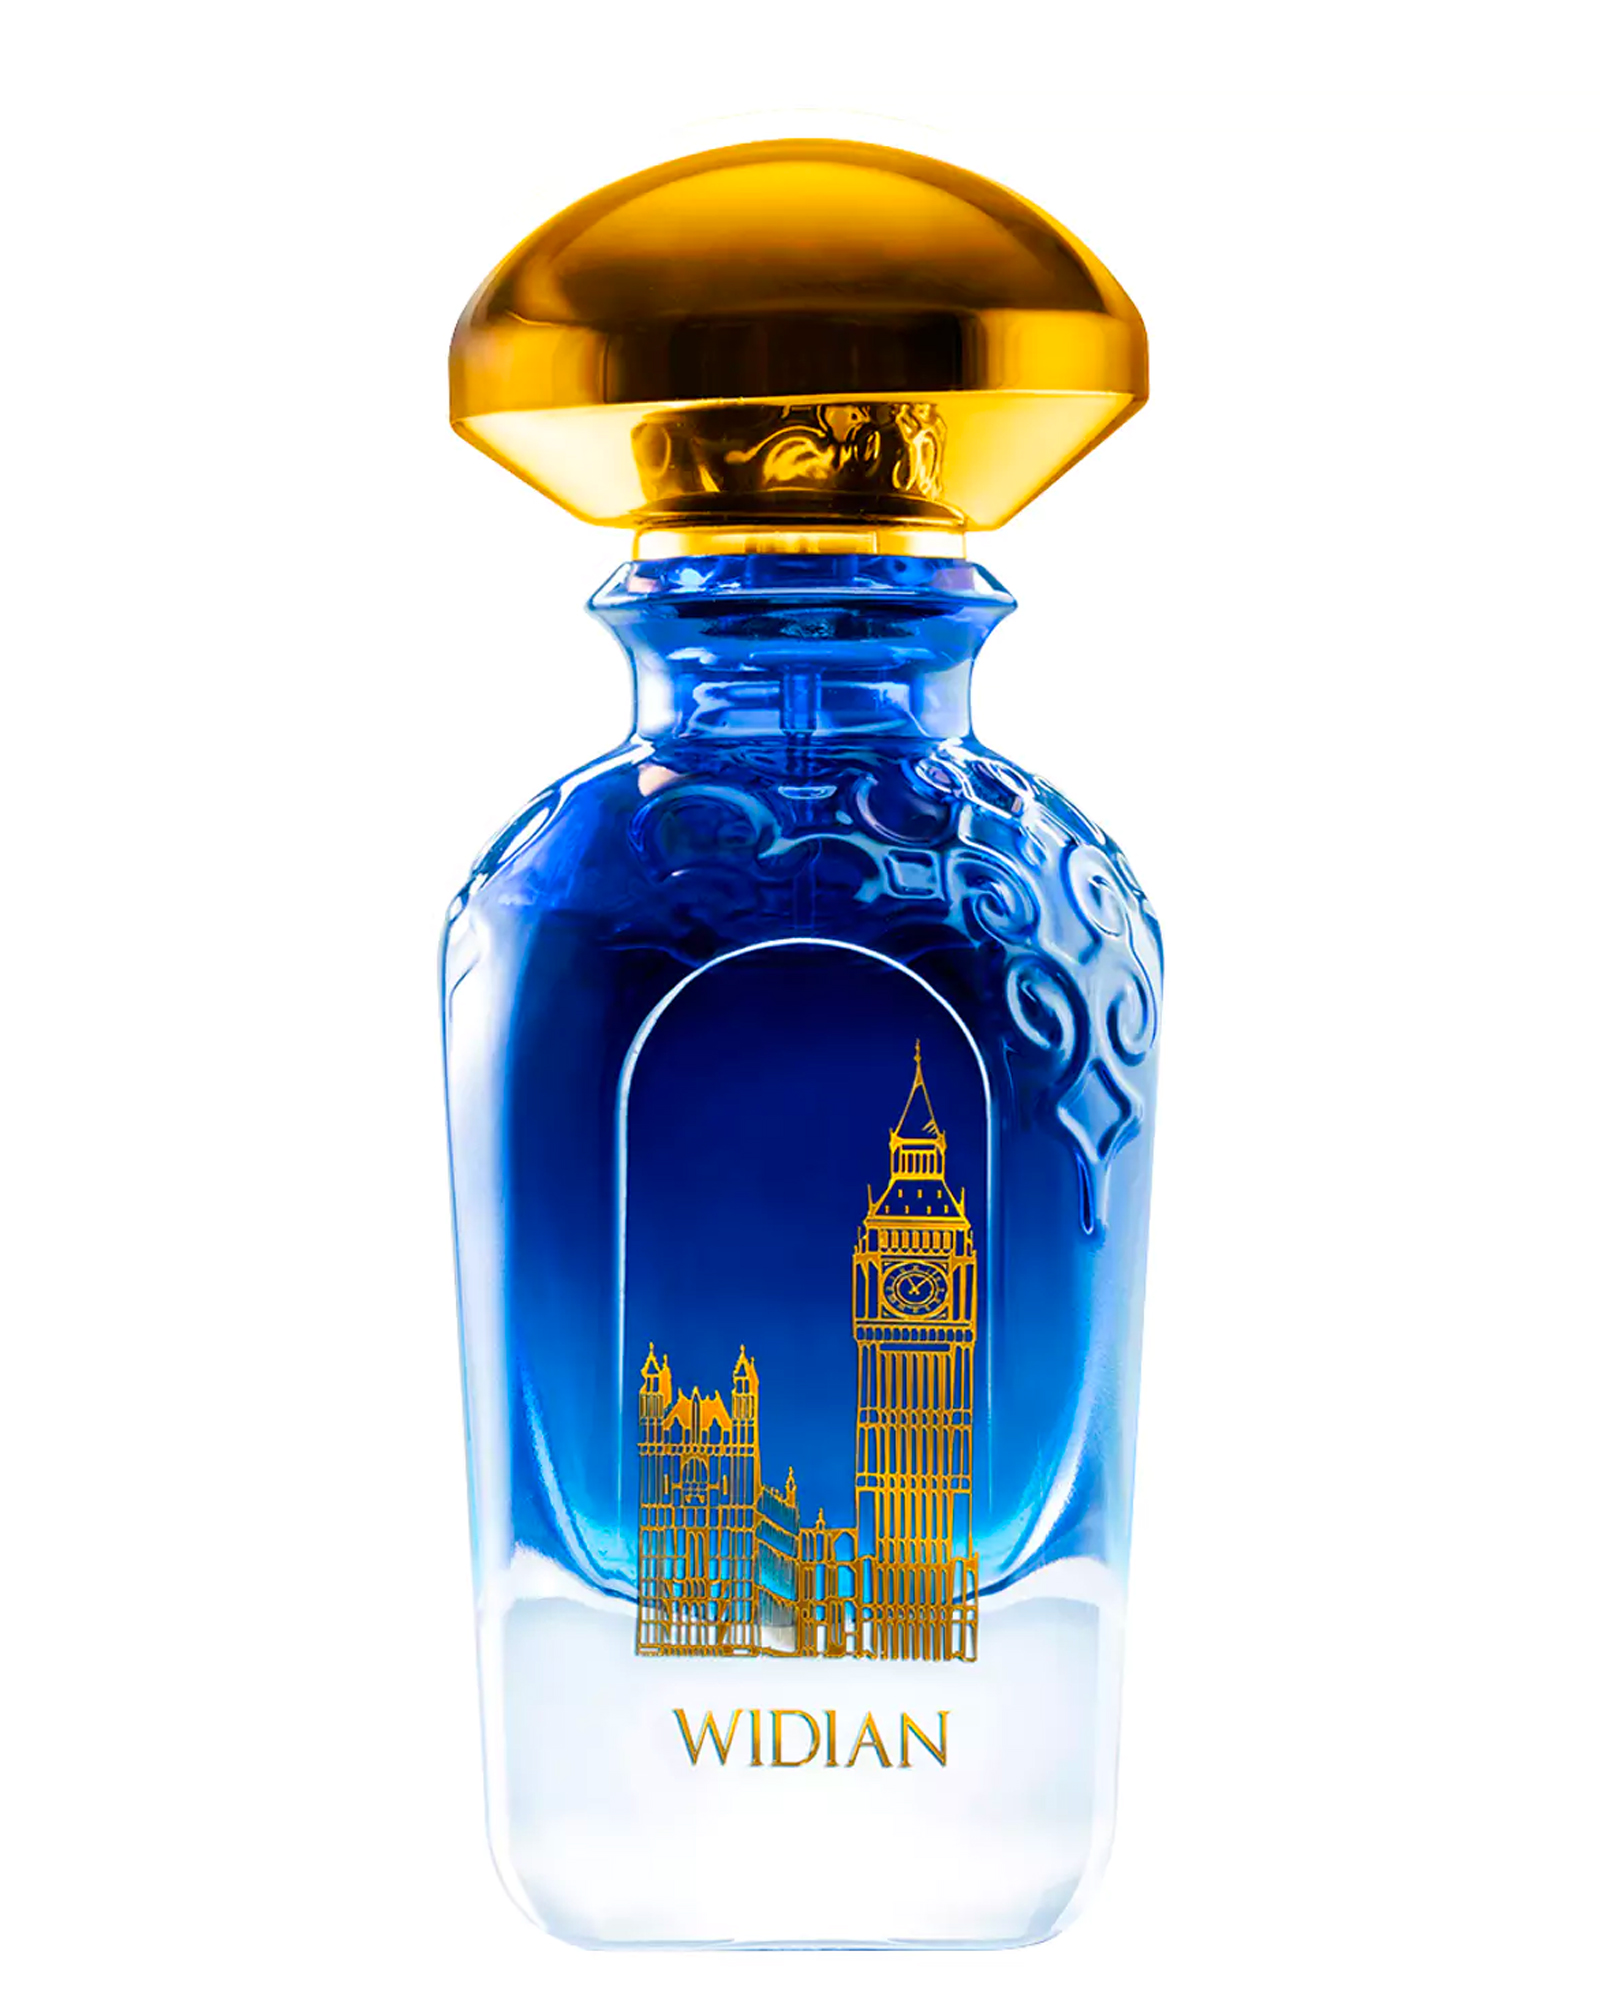 perfumes, luxury perfume bottles, Widjan bottle, luxury bottle